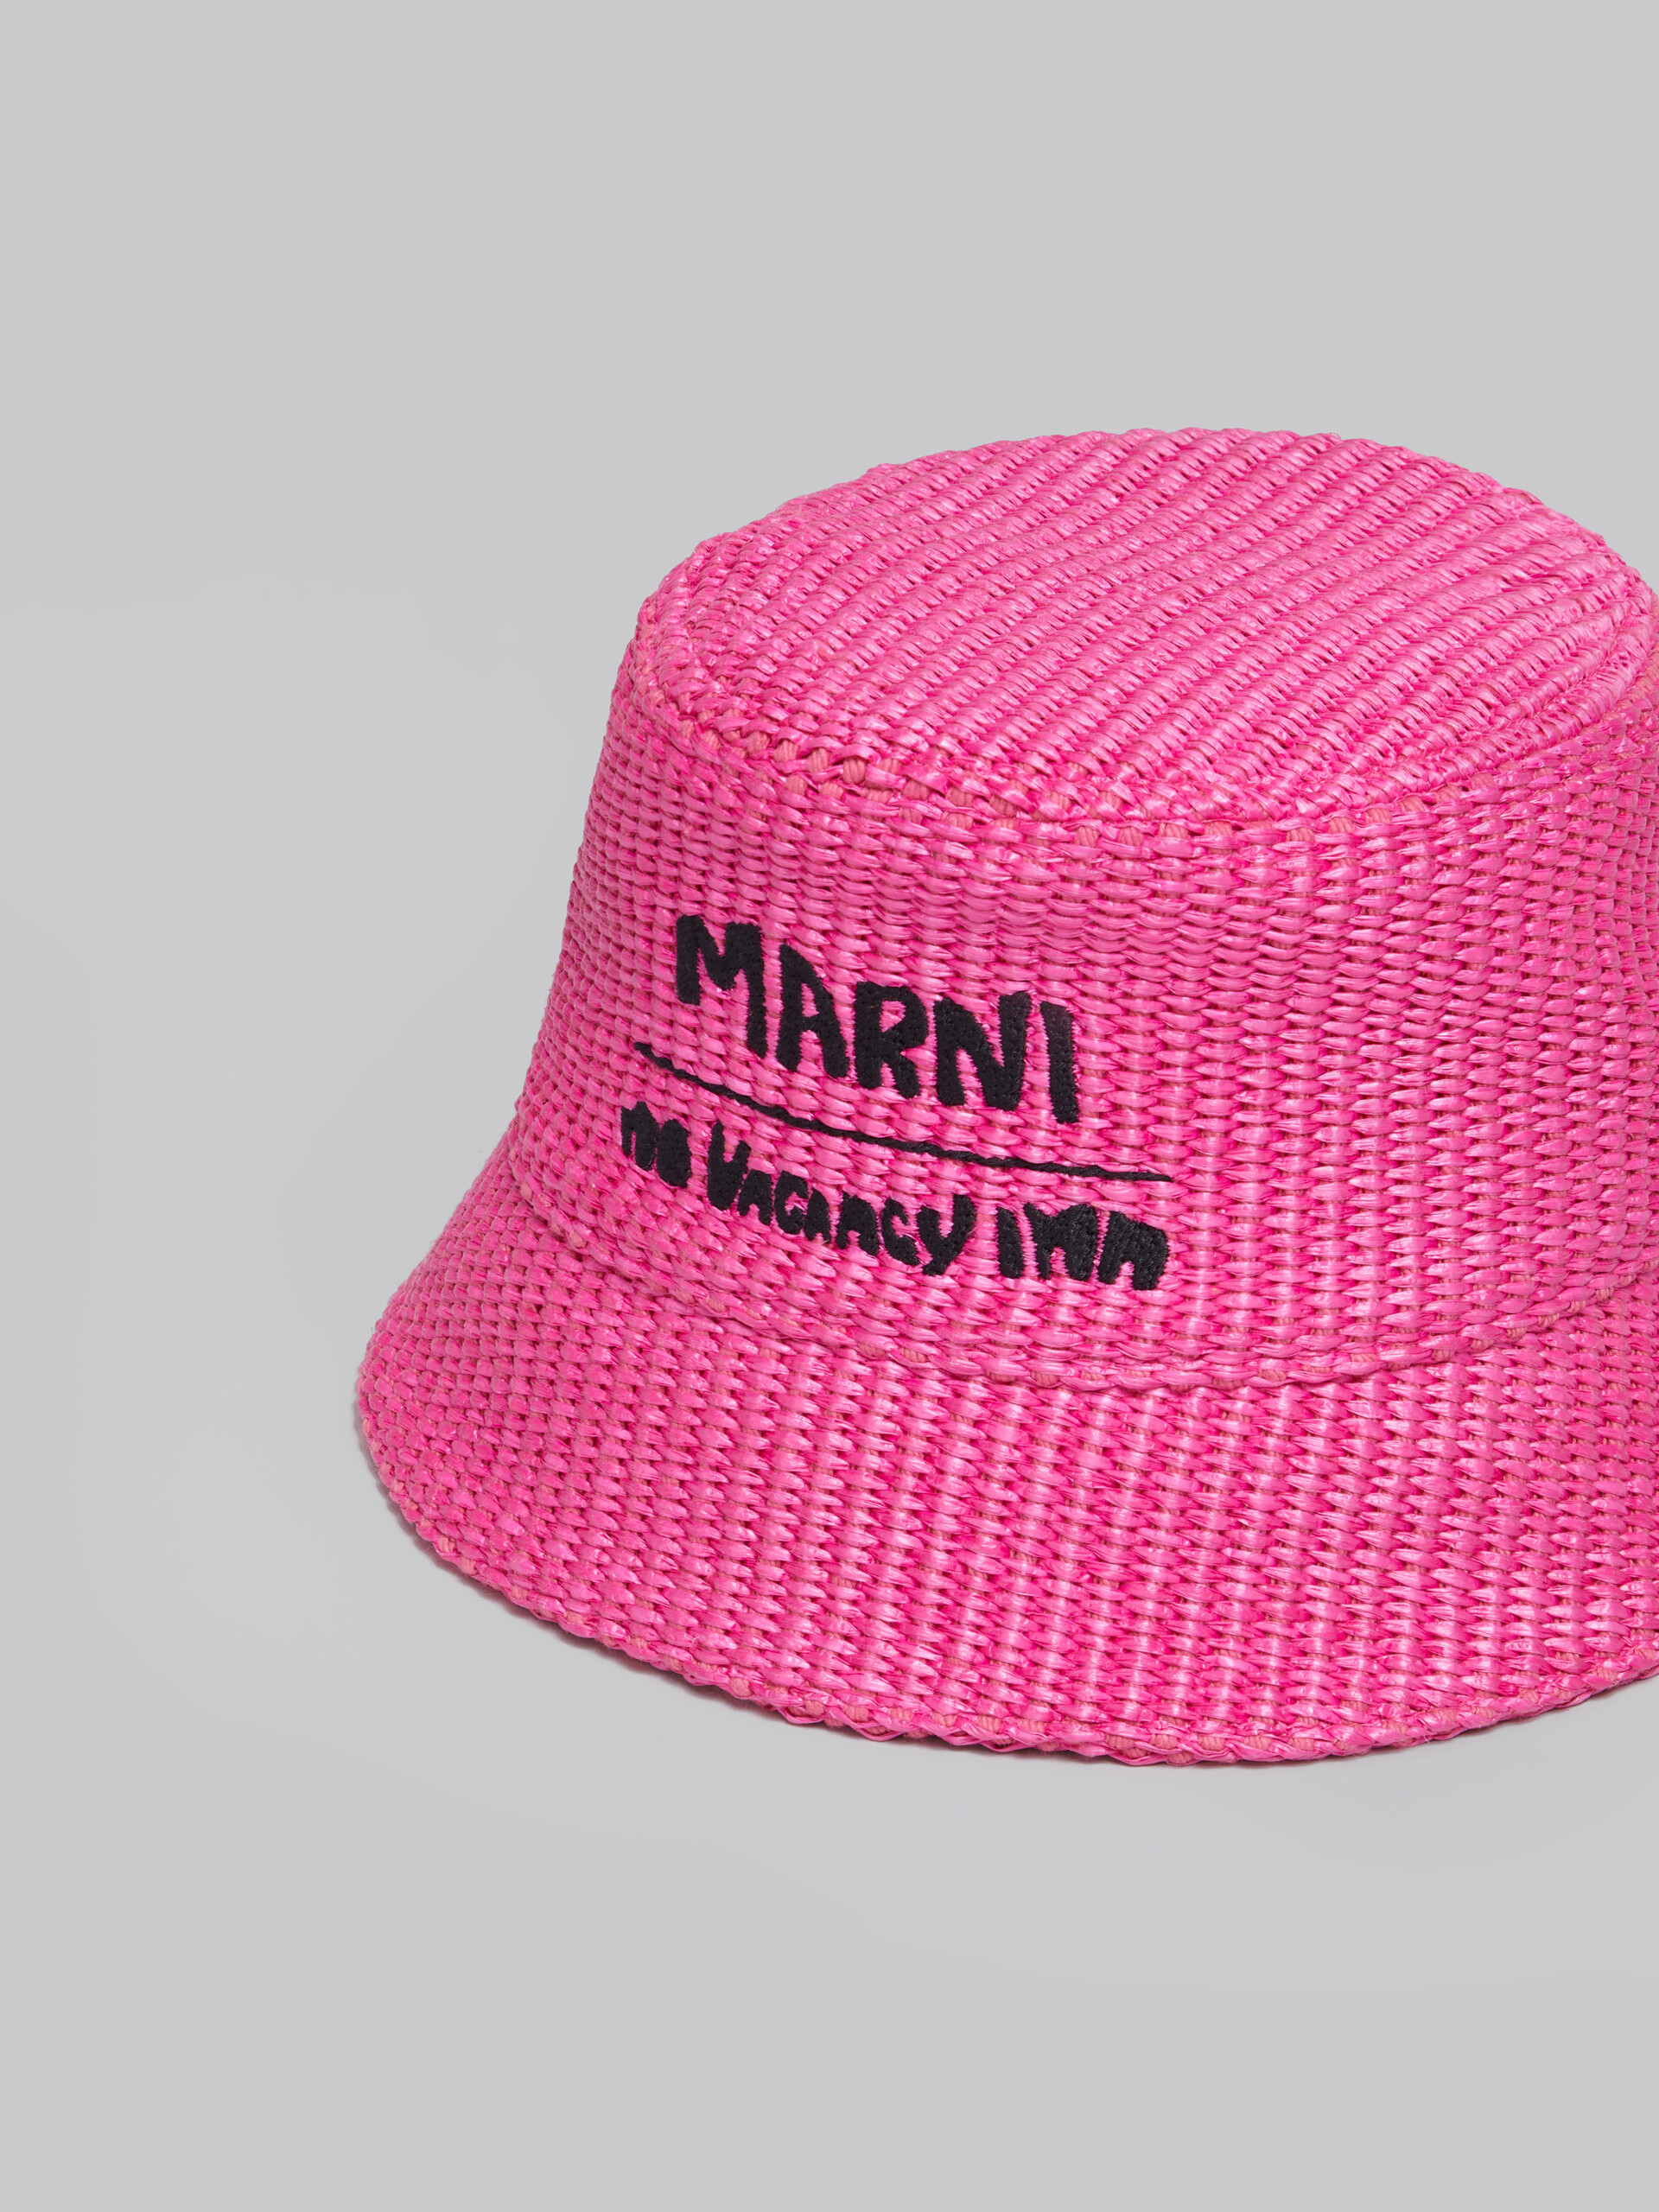 Marni x No Vacancy Inn - Fuchsia hat in raffia fabric - Hats - Image 4